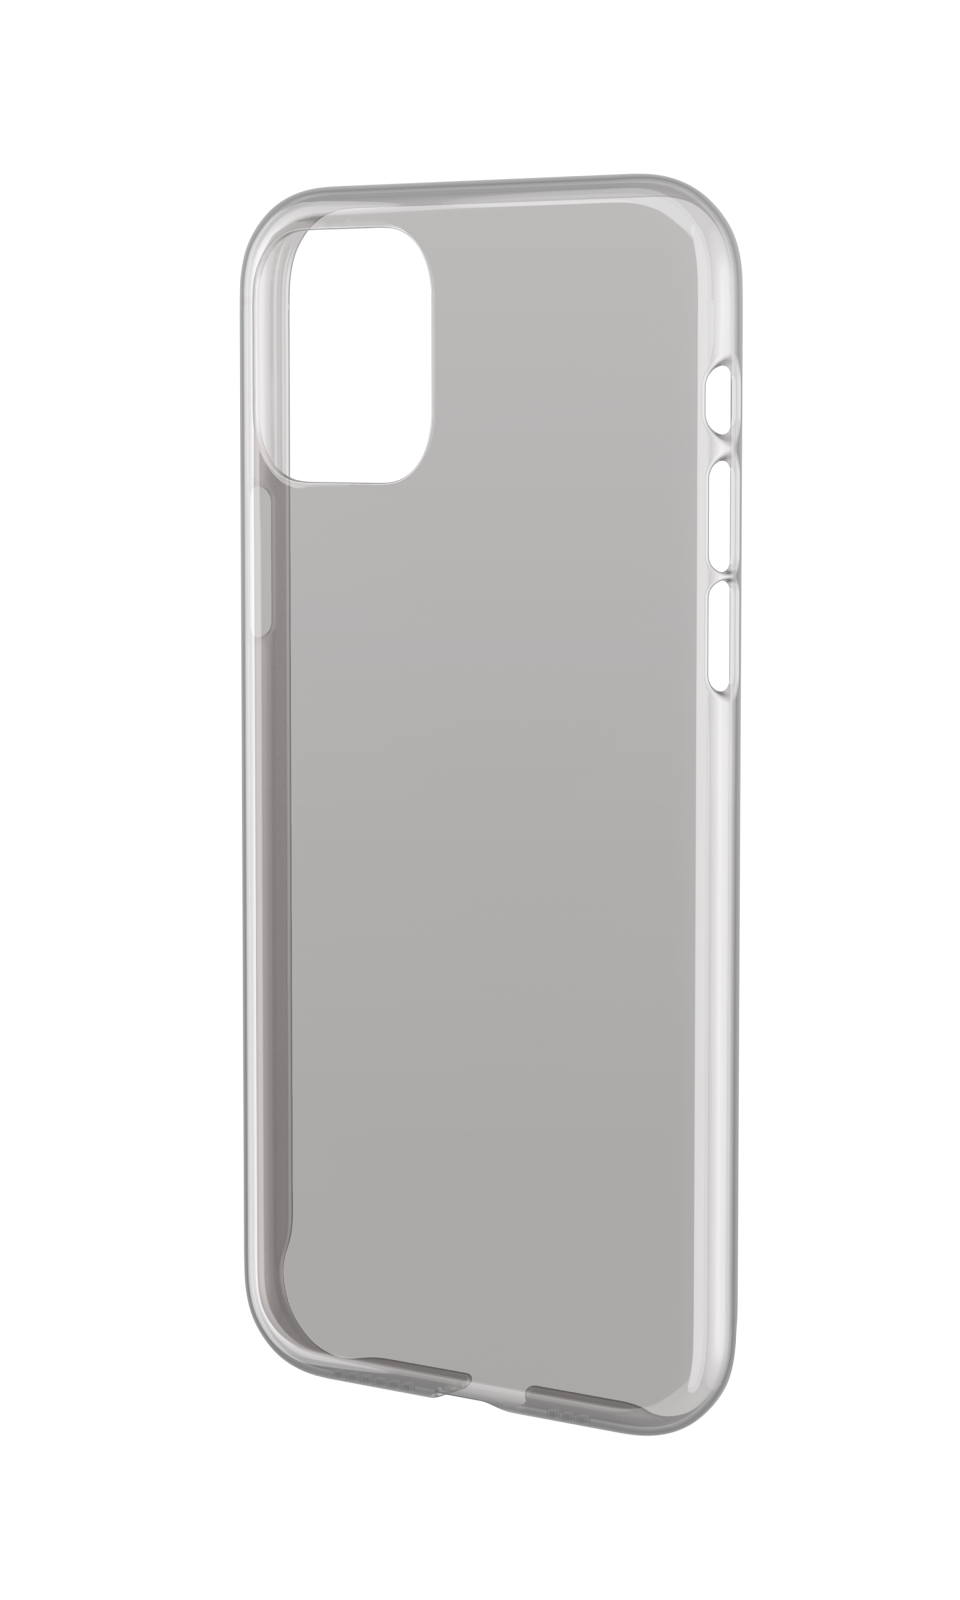 iPhone 11 Pro Max Air Jacket超薄保護殼 (透黑)